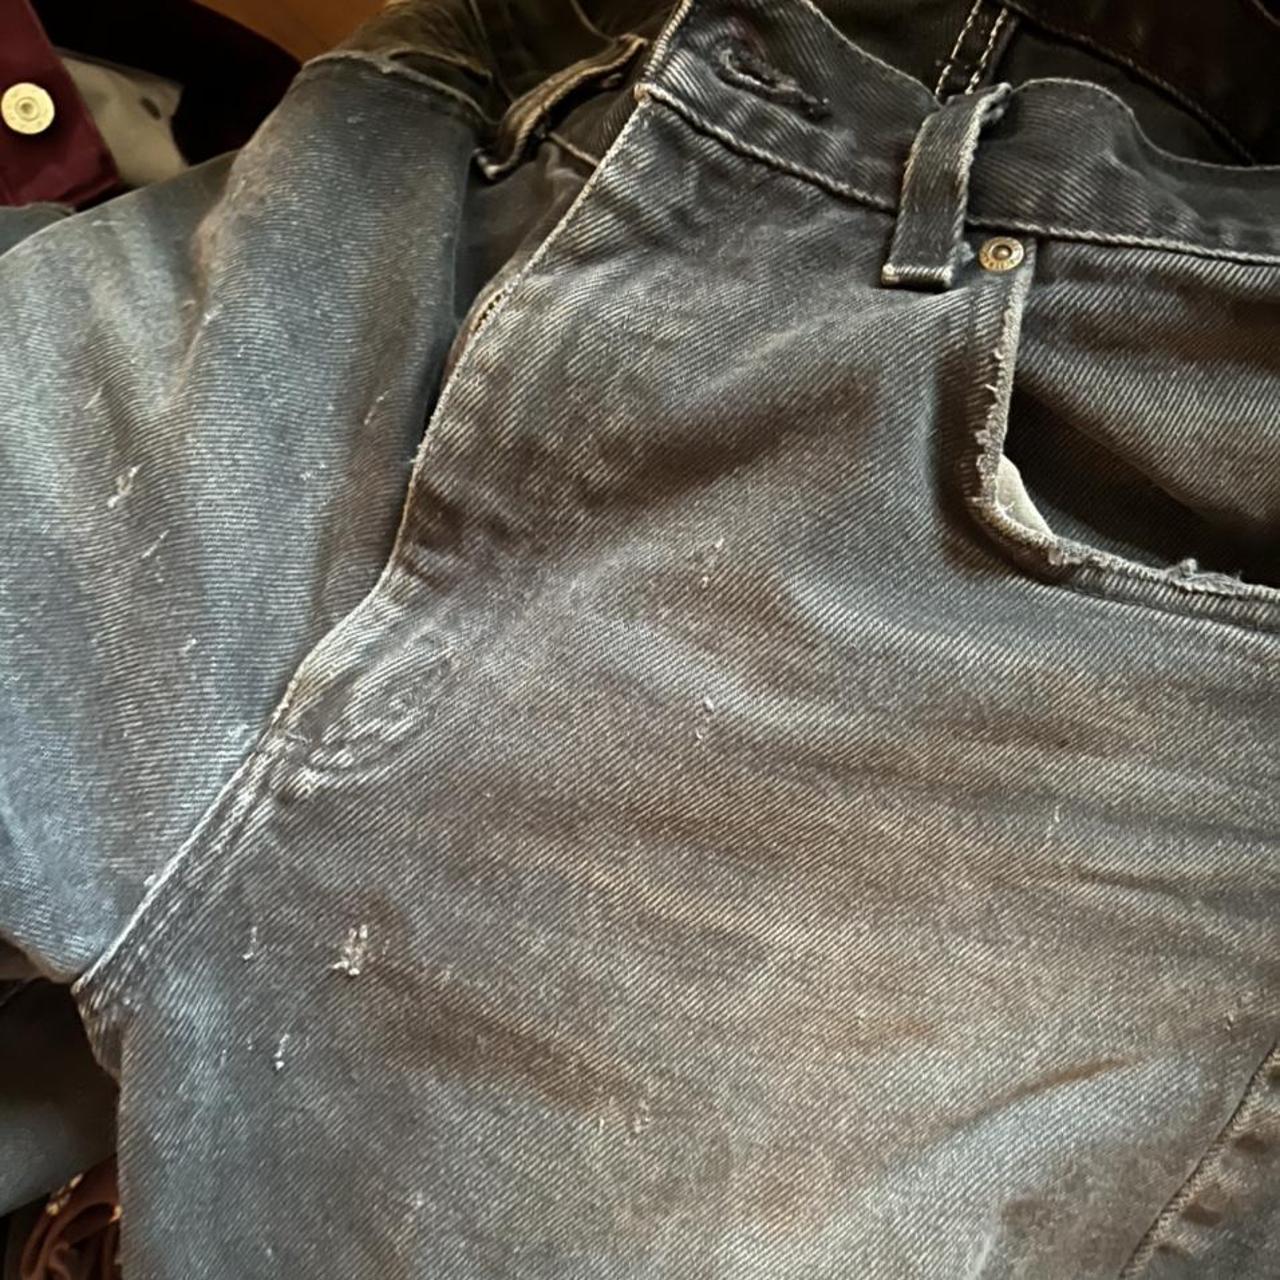 Carhartt 90s vintage black jeans. Size 35”x34” a - Depop